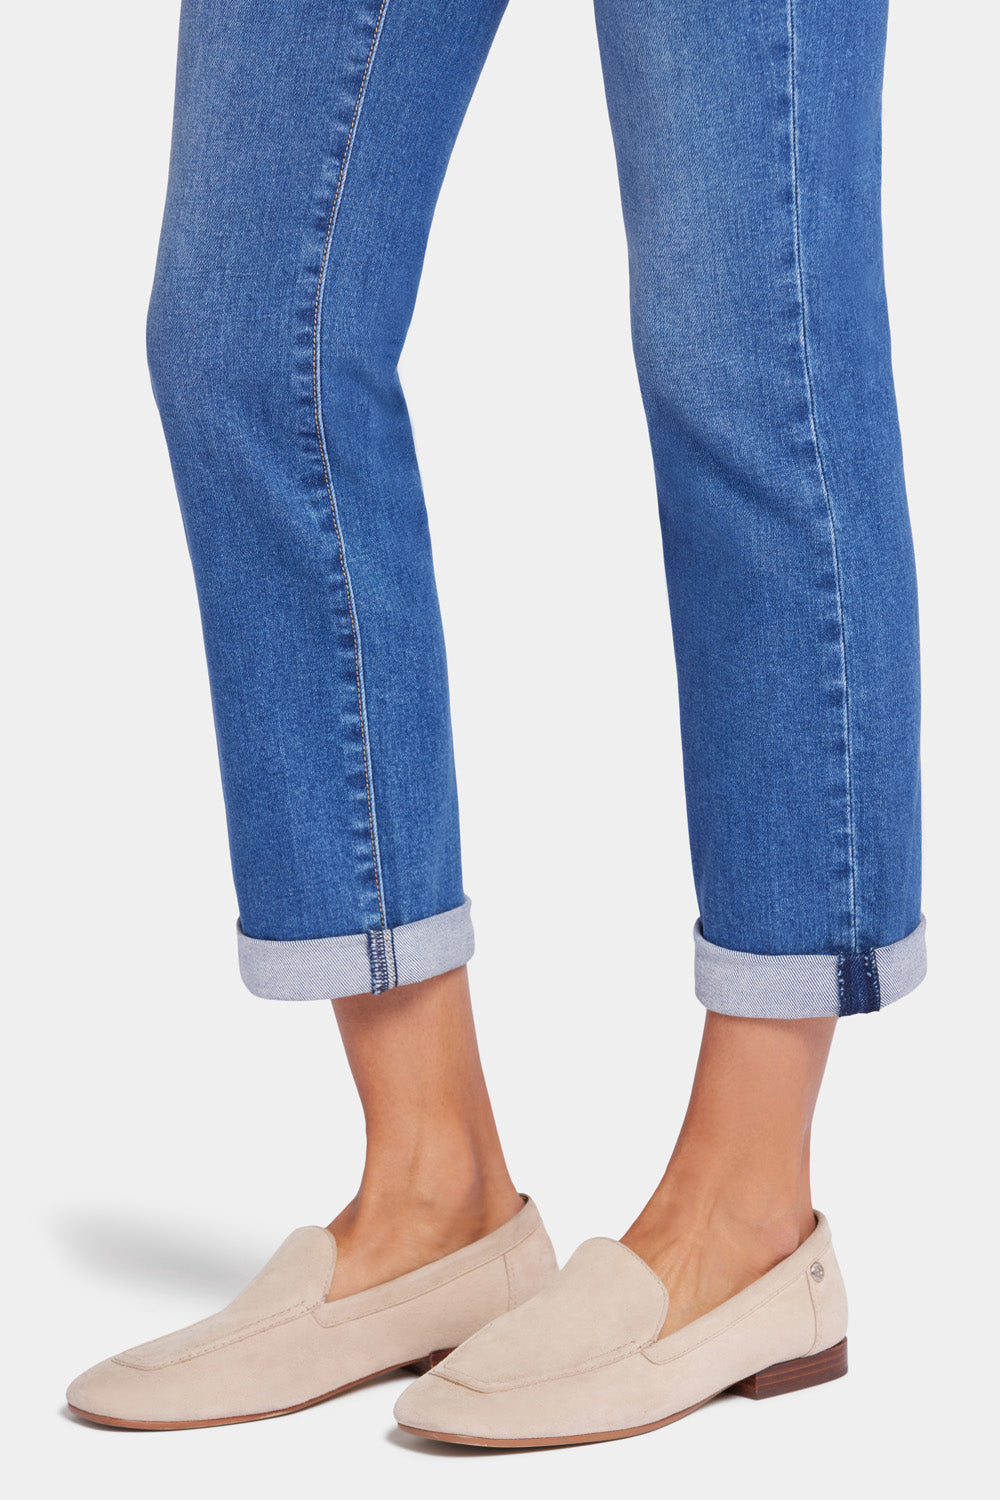 NYDJ Sheri Slim Ankle Jeans With Roll Cuffs - Rockford